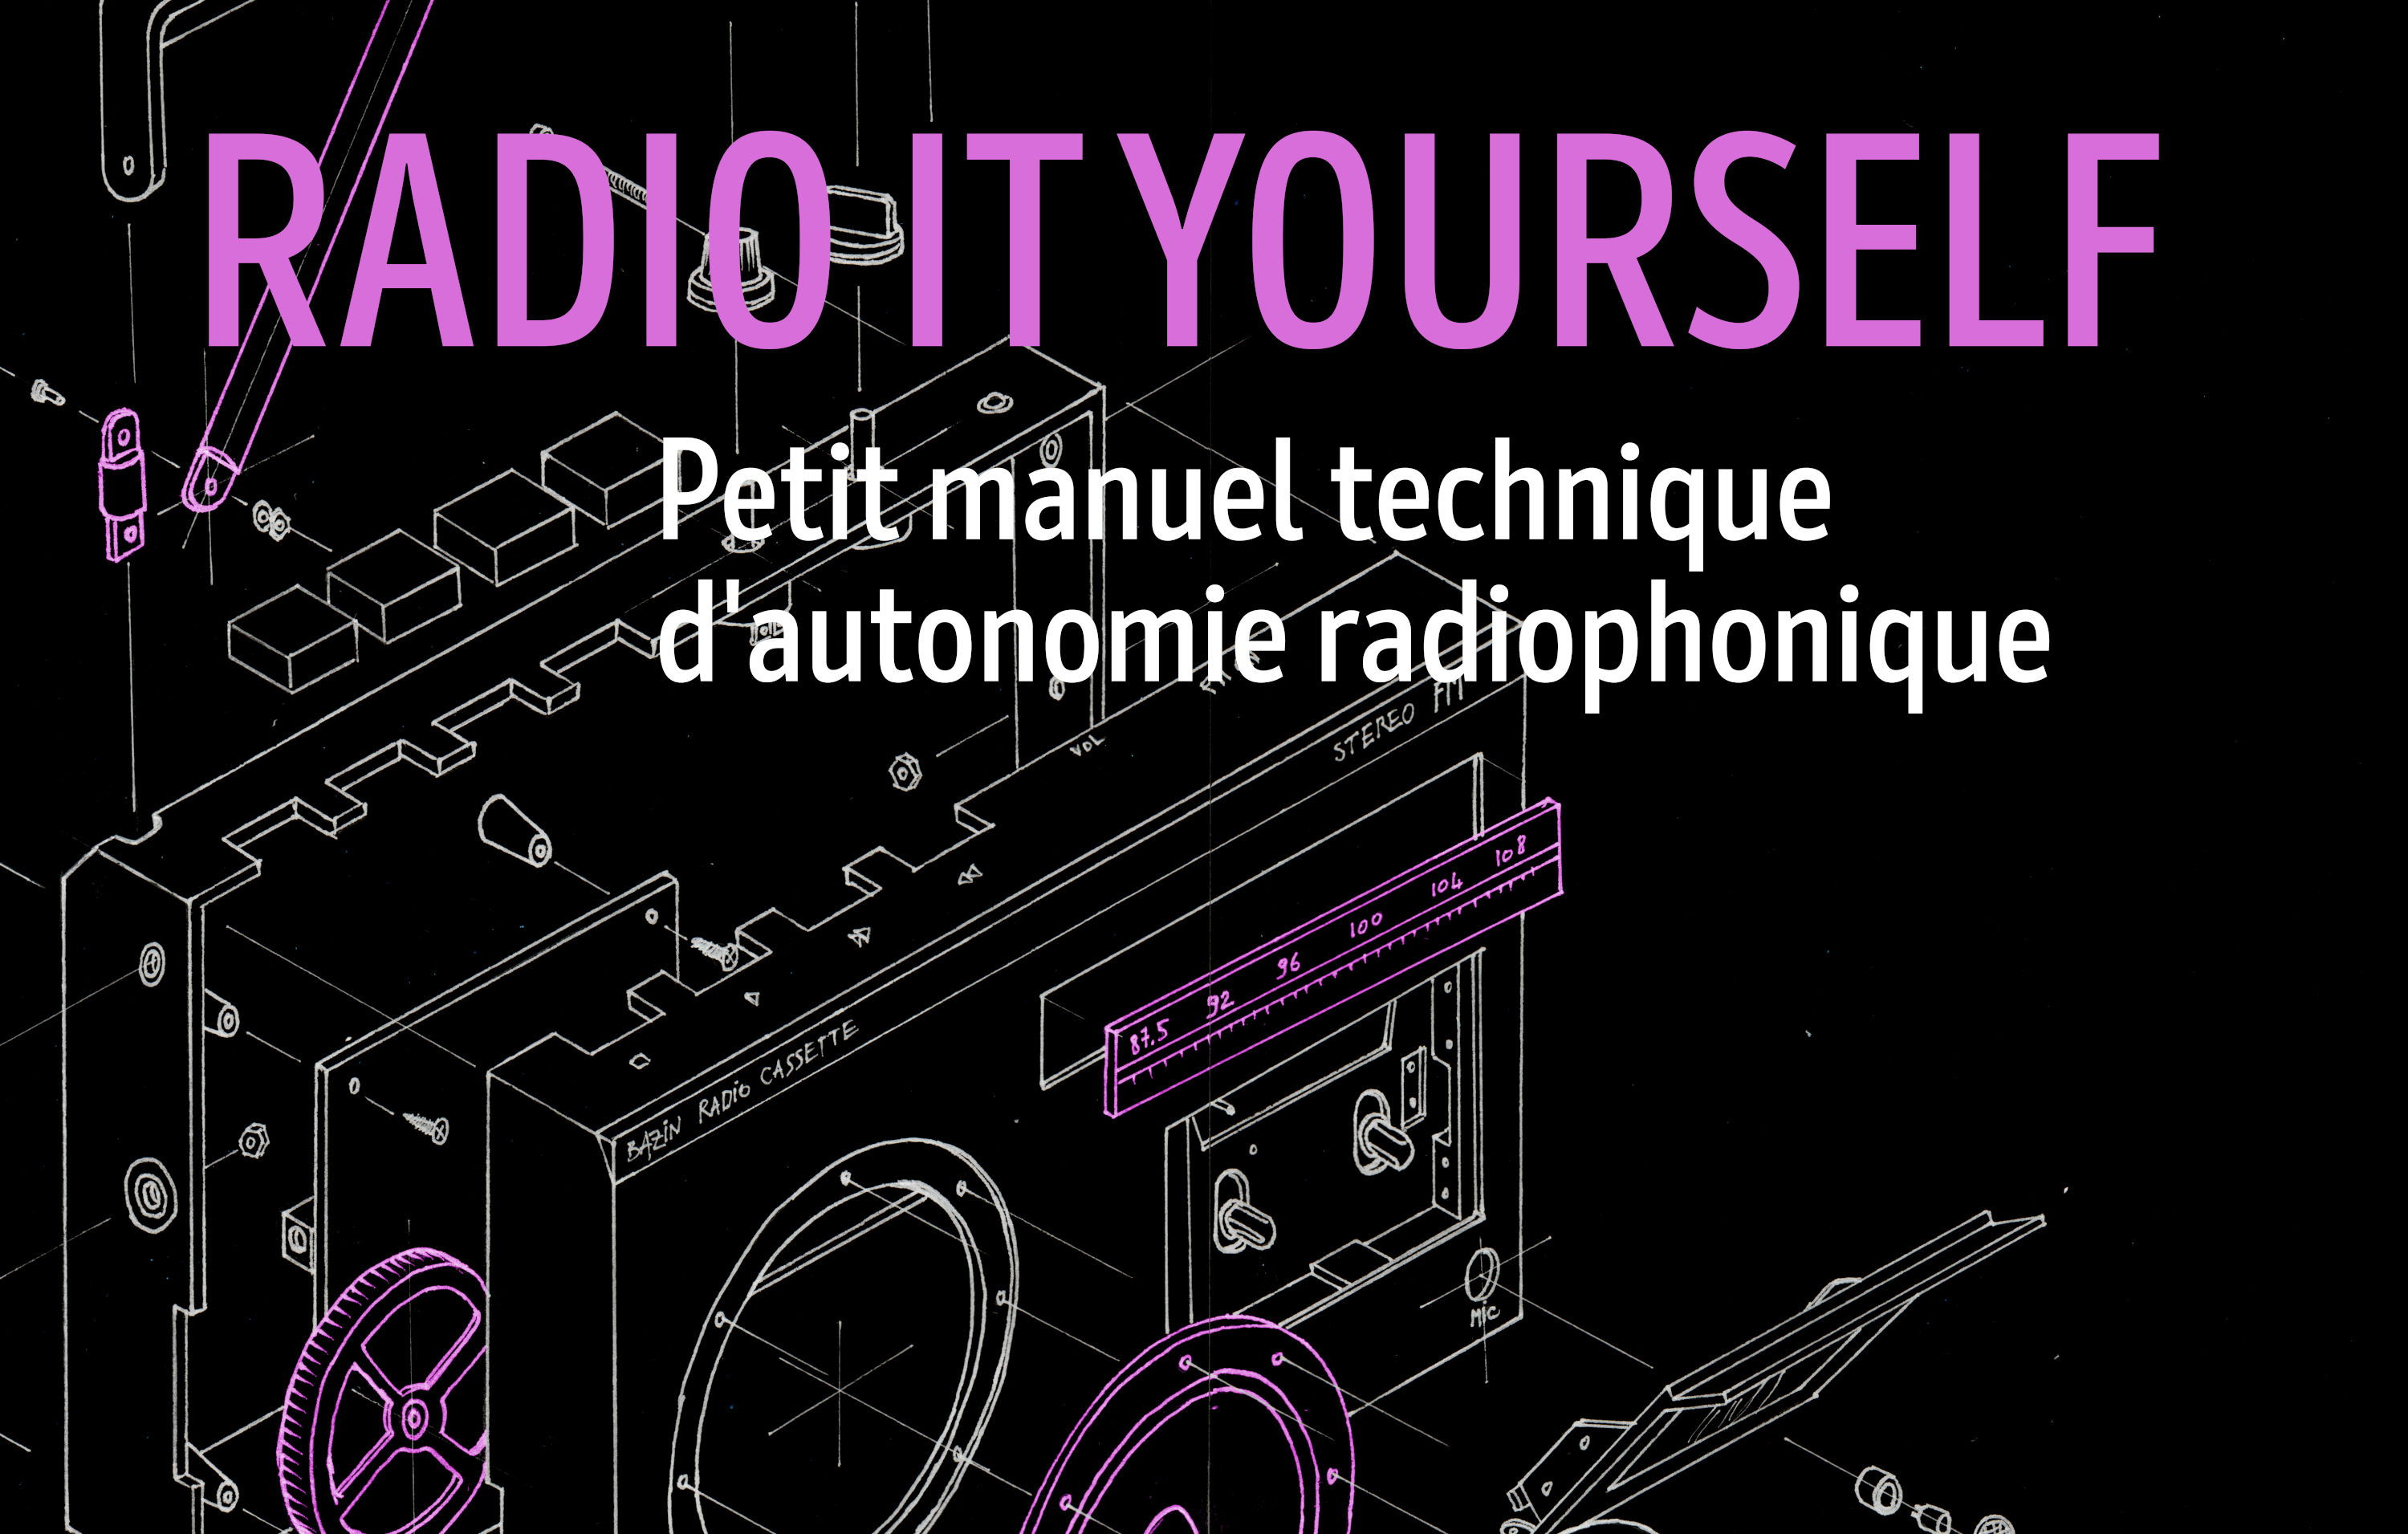 Radio It Yourself